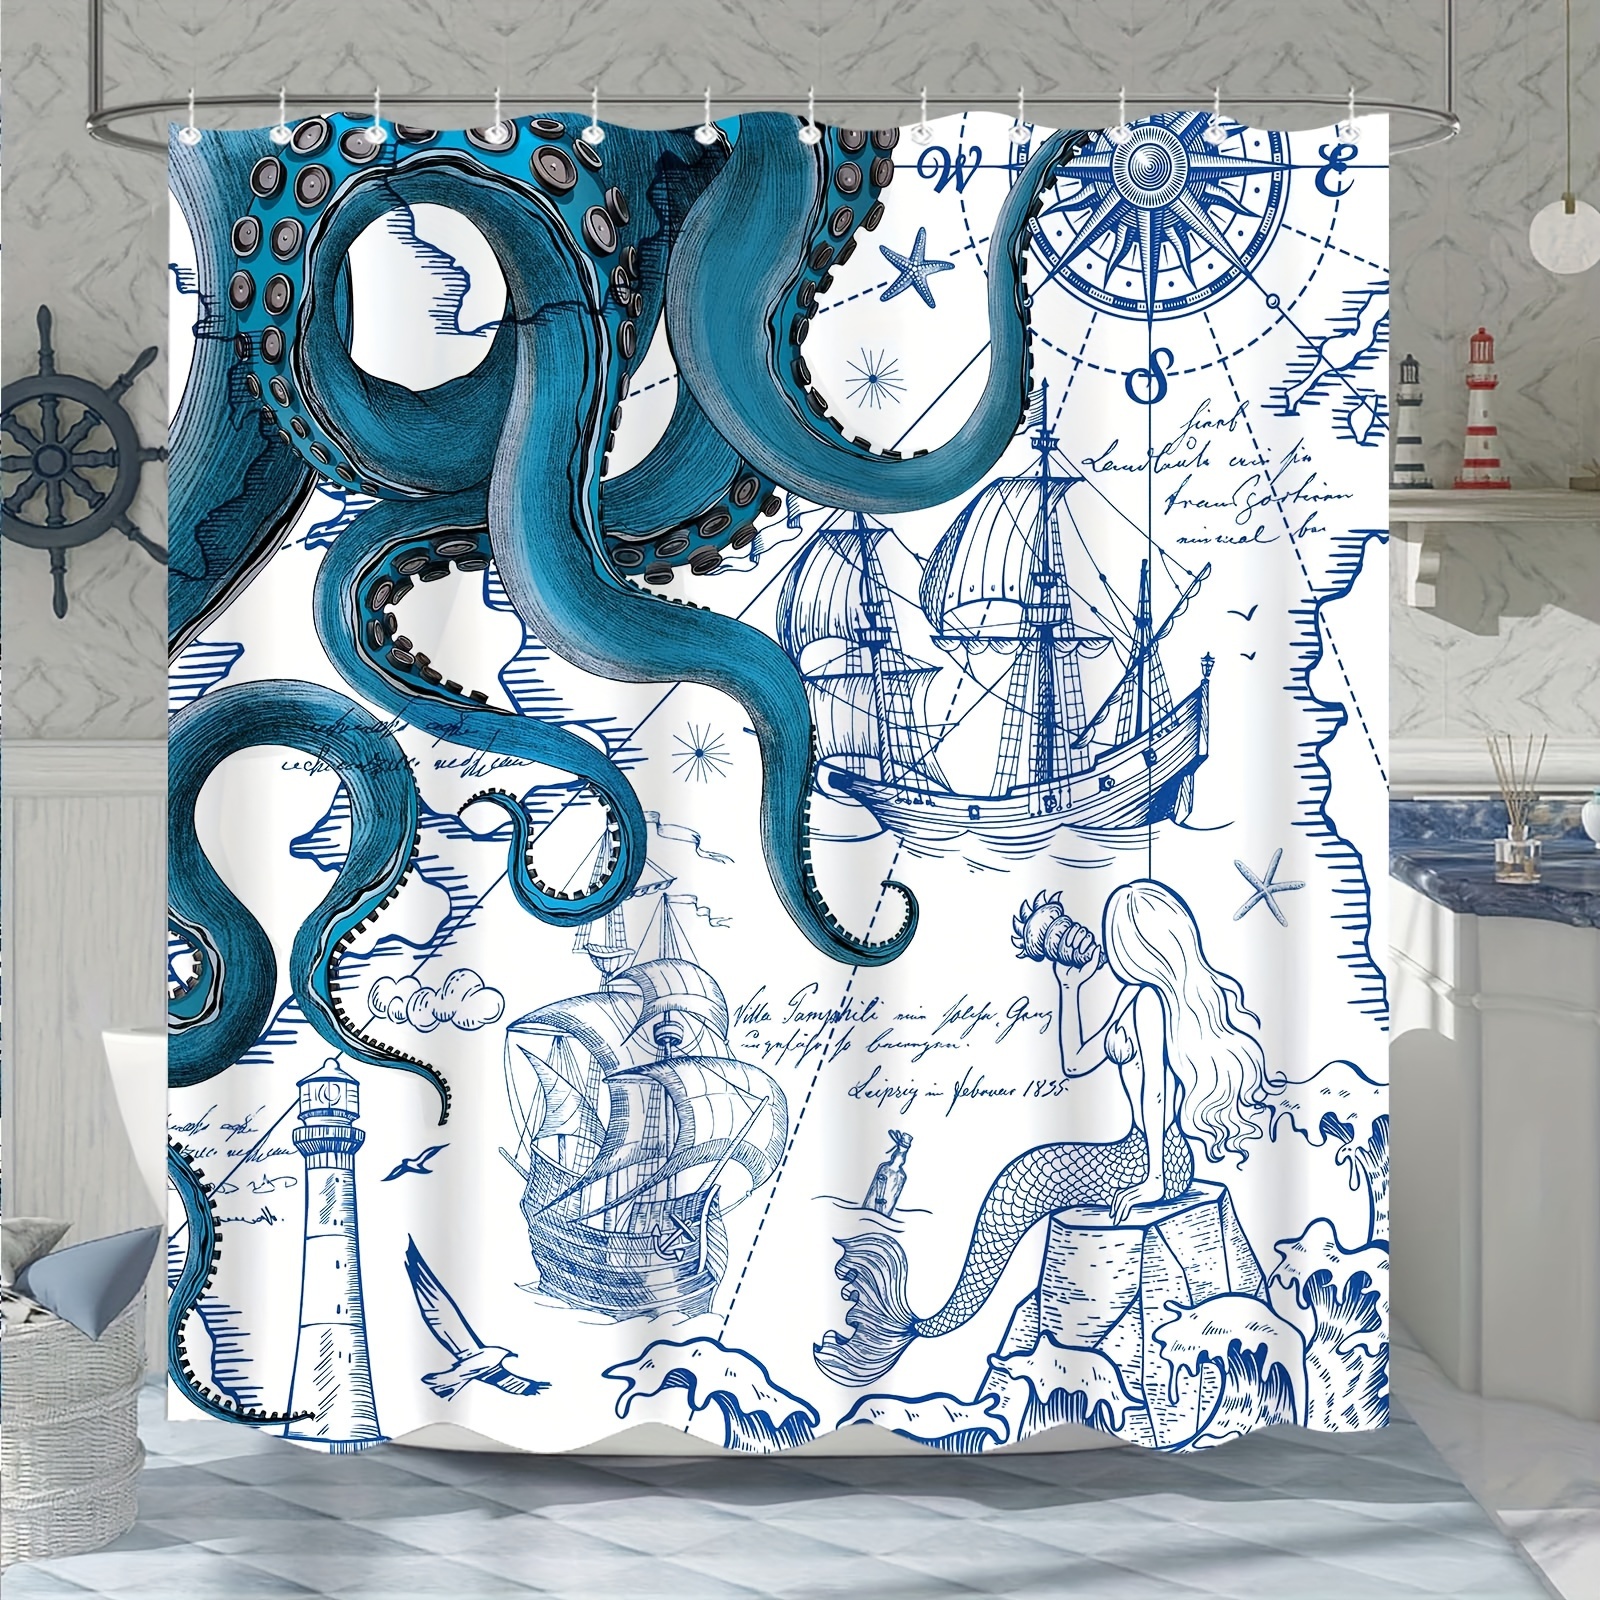 

Blue Nautical Octopus Shower Curtain Navy Mermaid Funny Ocean Shower Curtains For Bathroom Cool Anchor Coastal Map Waterproof Fabric Bath Curtain Decor With Hooks